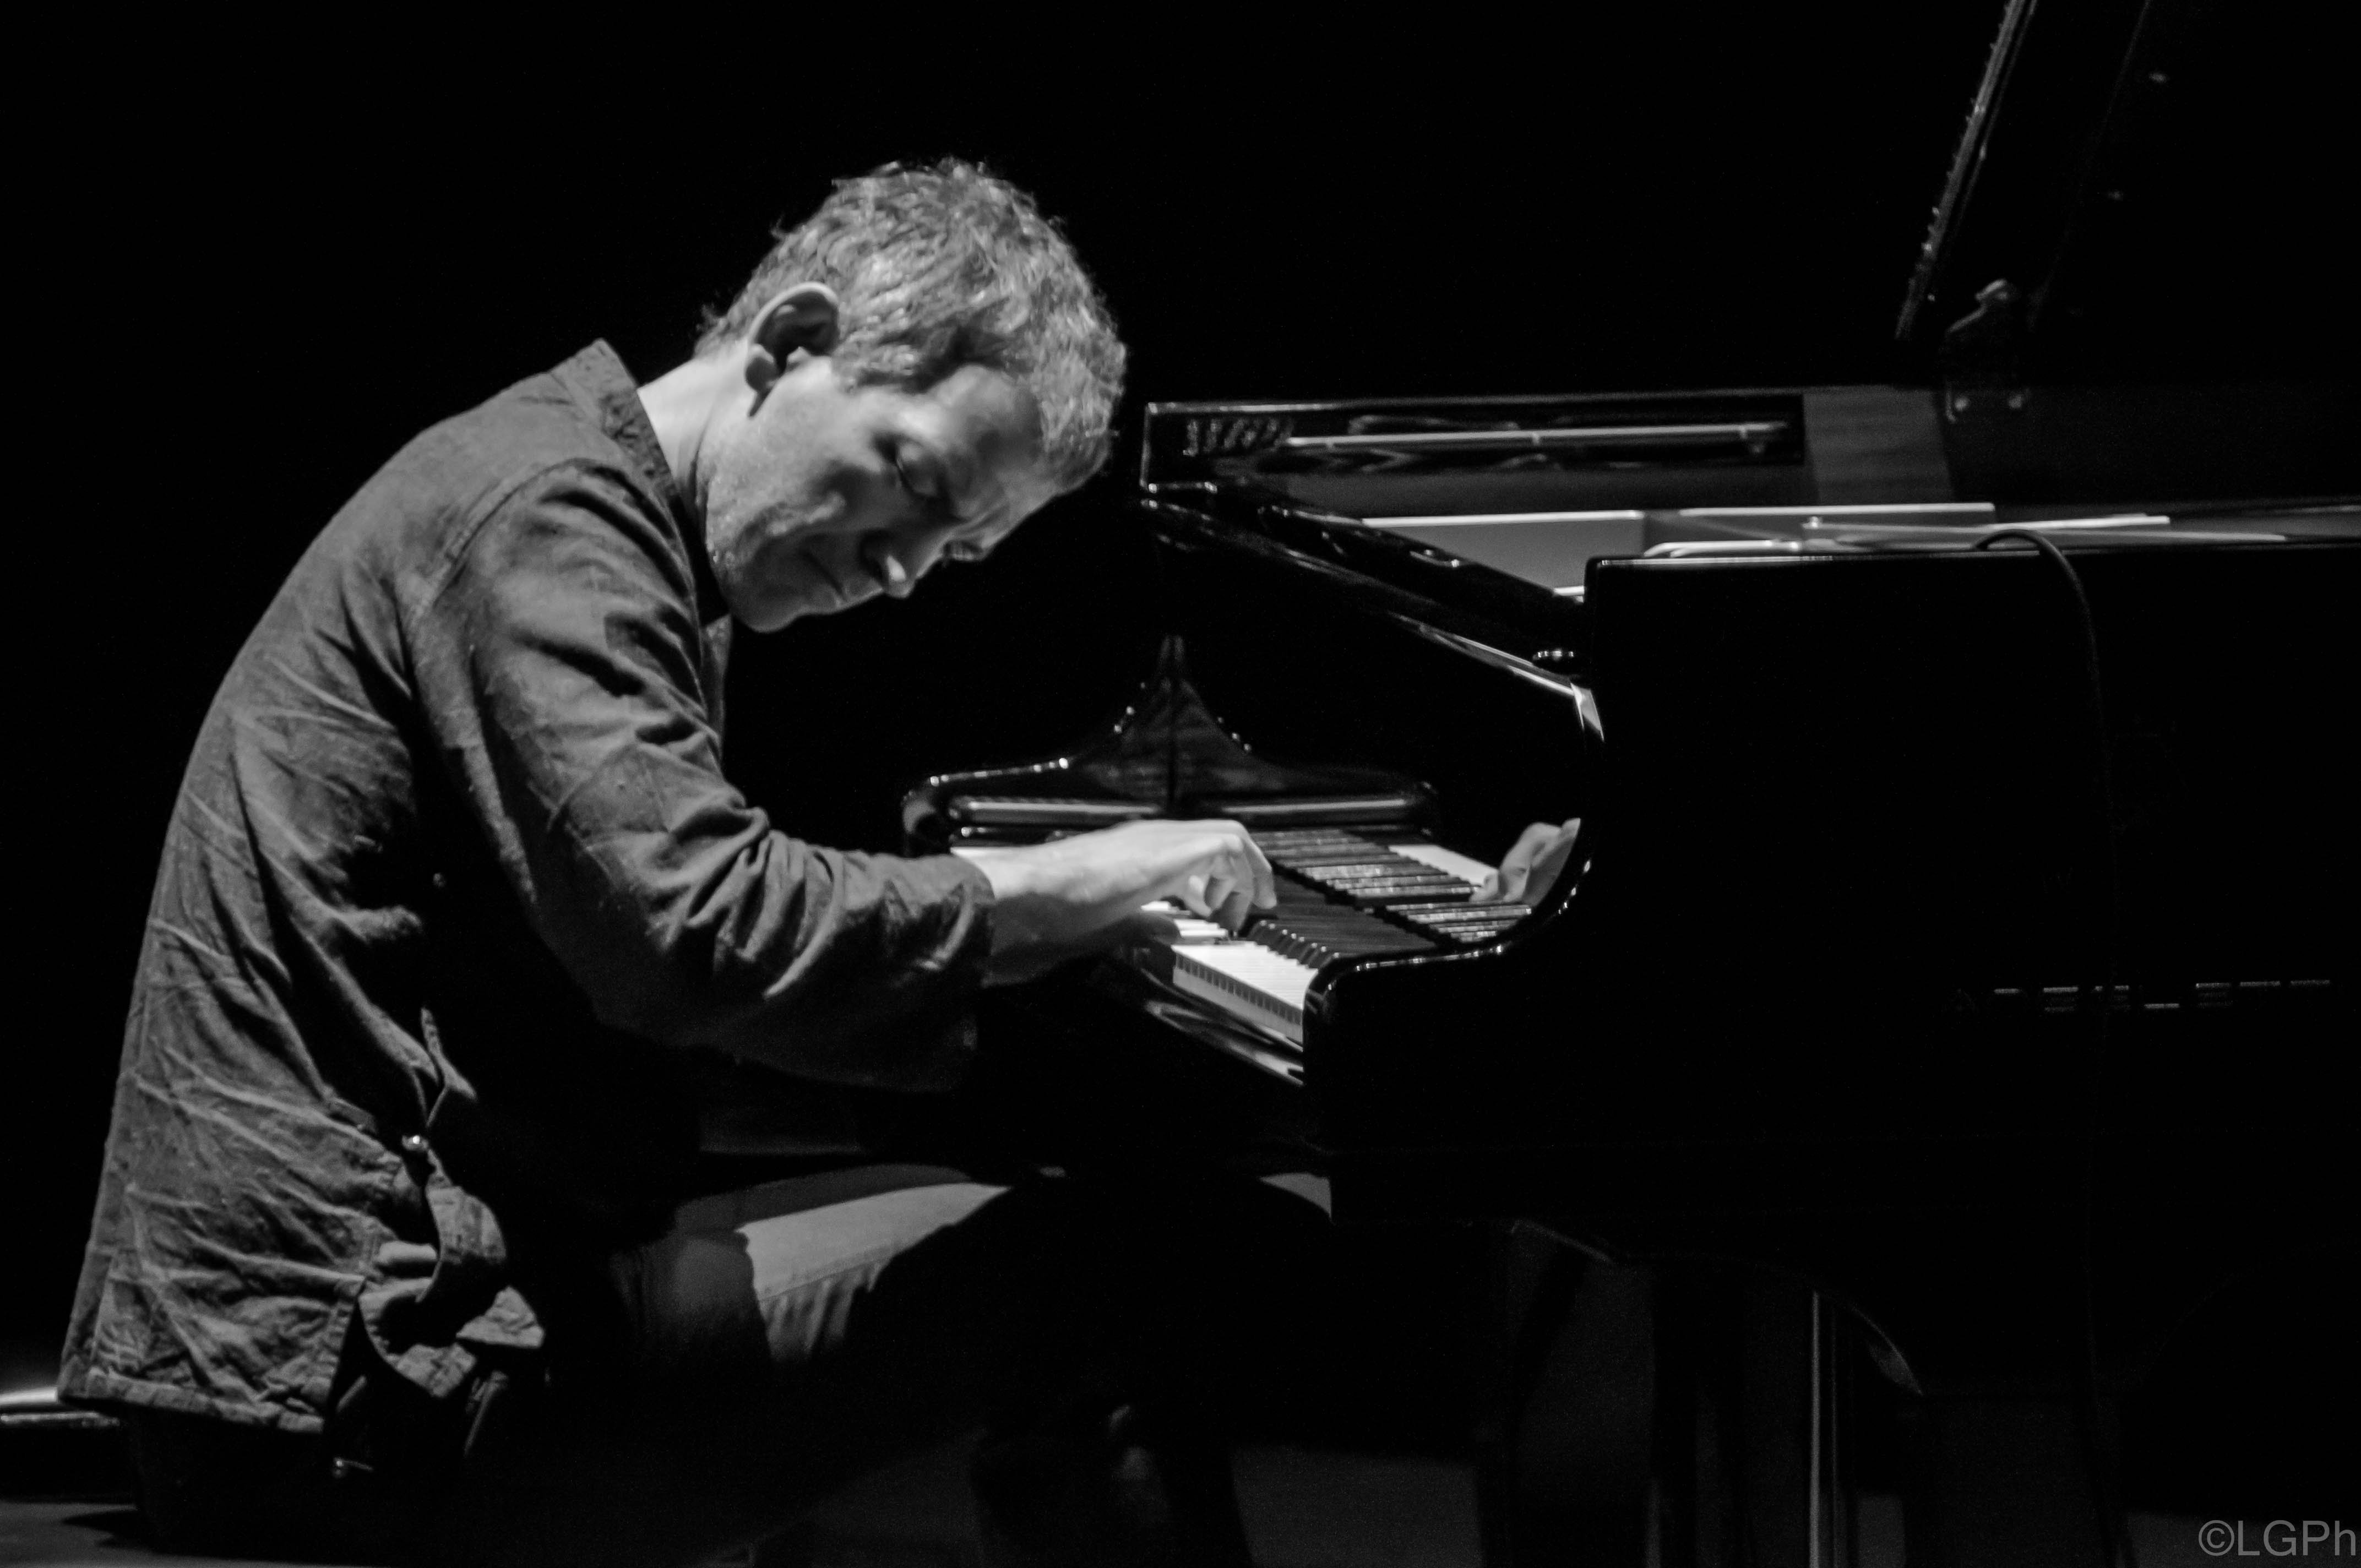 Festival de Jazz de Barcelona: Brad Mehldau per a principiants